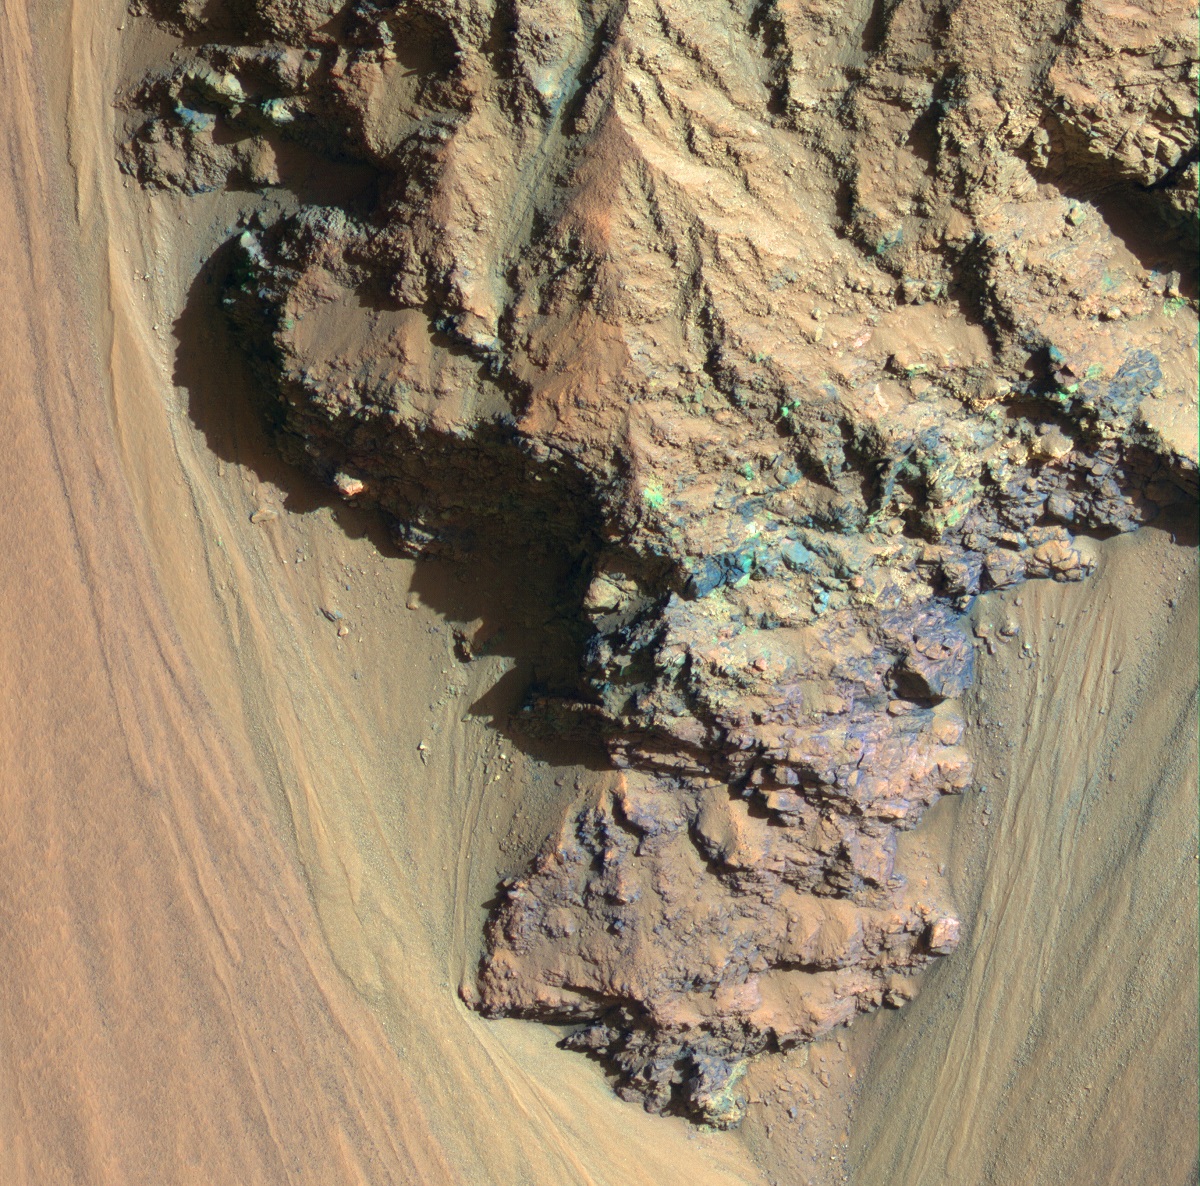 Geologic History Revealed in Valles Marineris